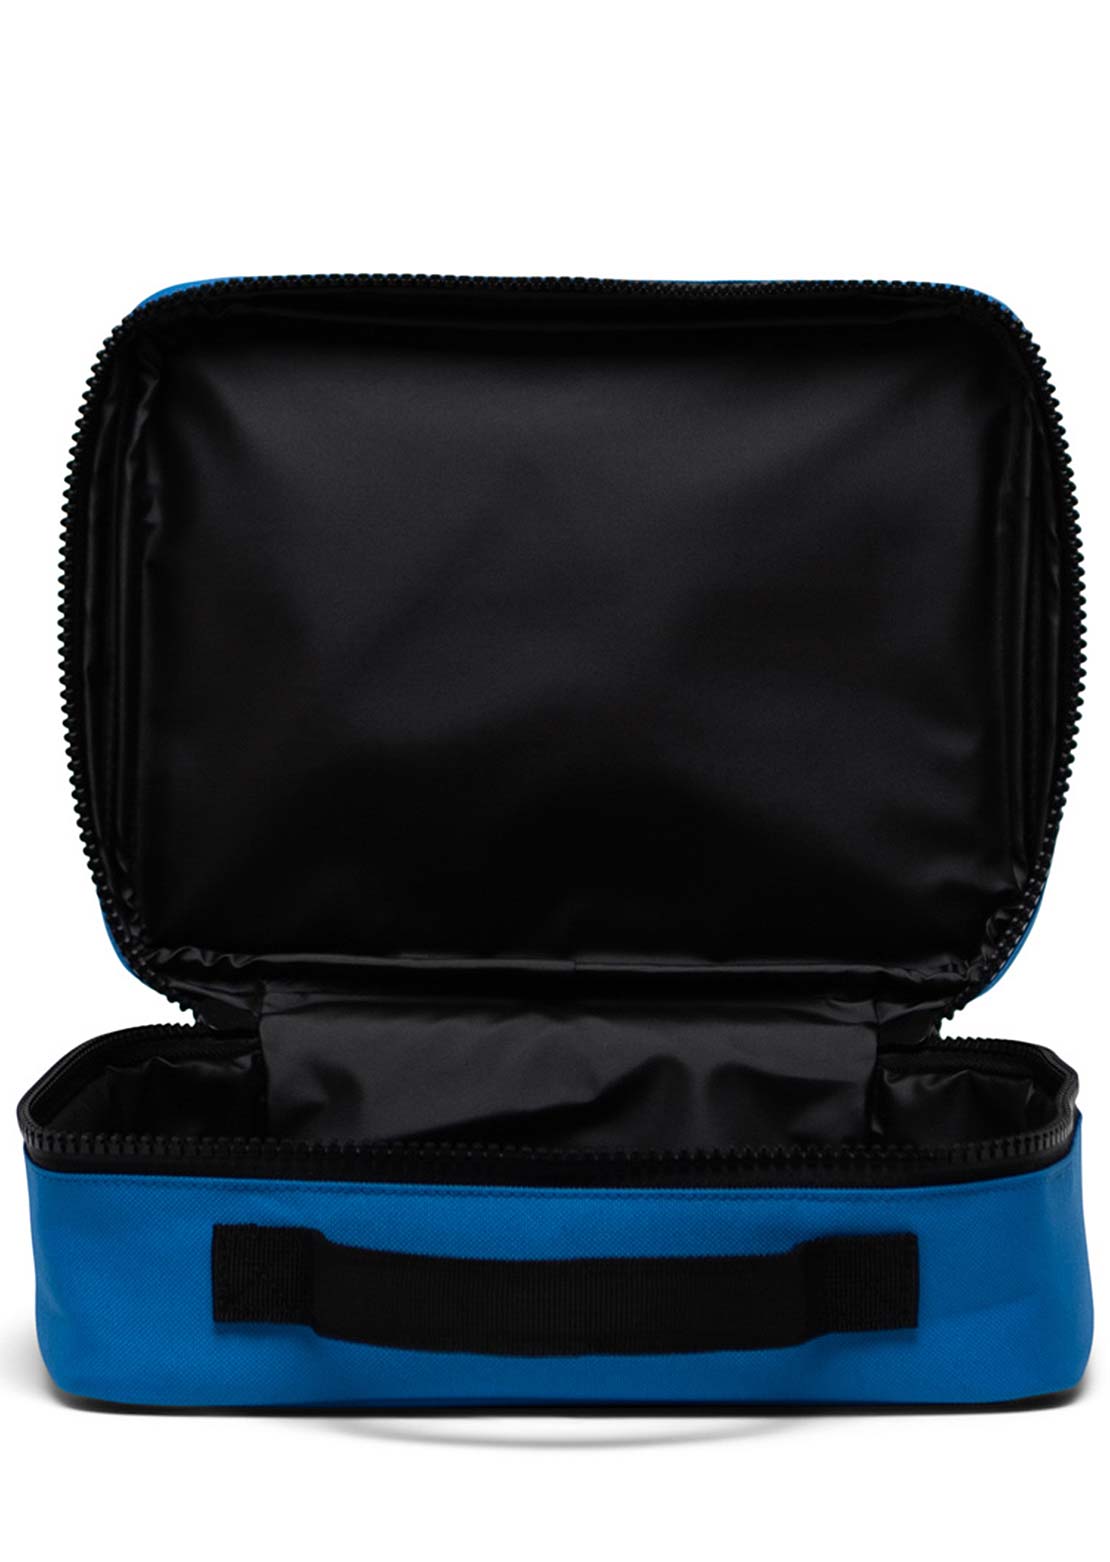 Herschel Pop Quiz Insulated Lunch Box Strong Blue